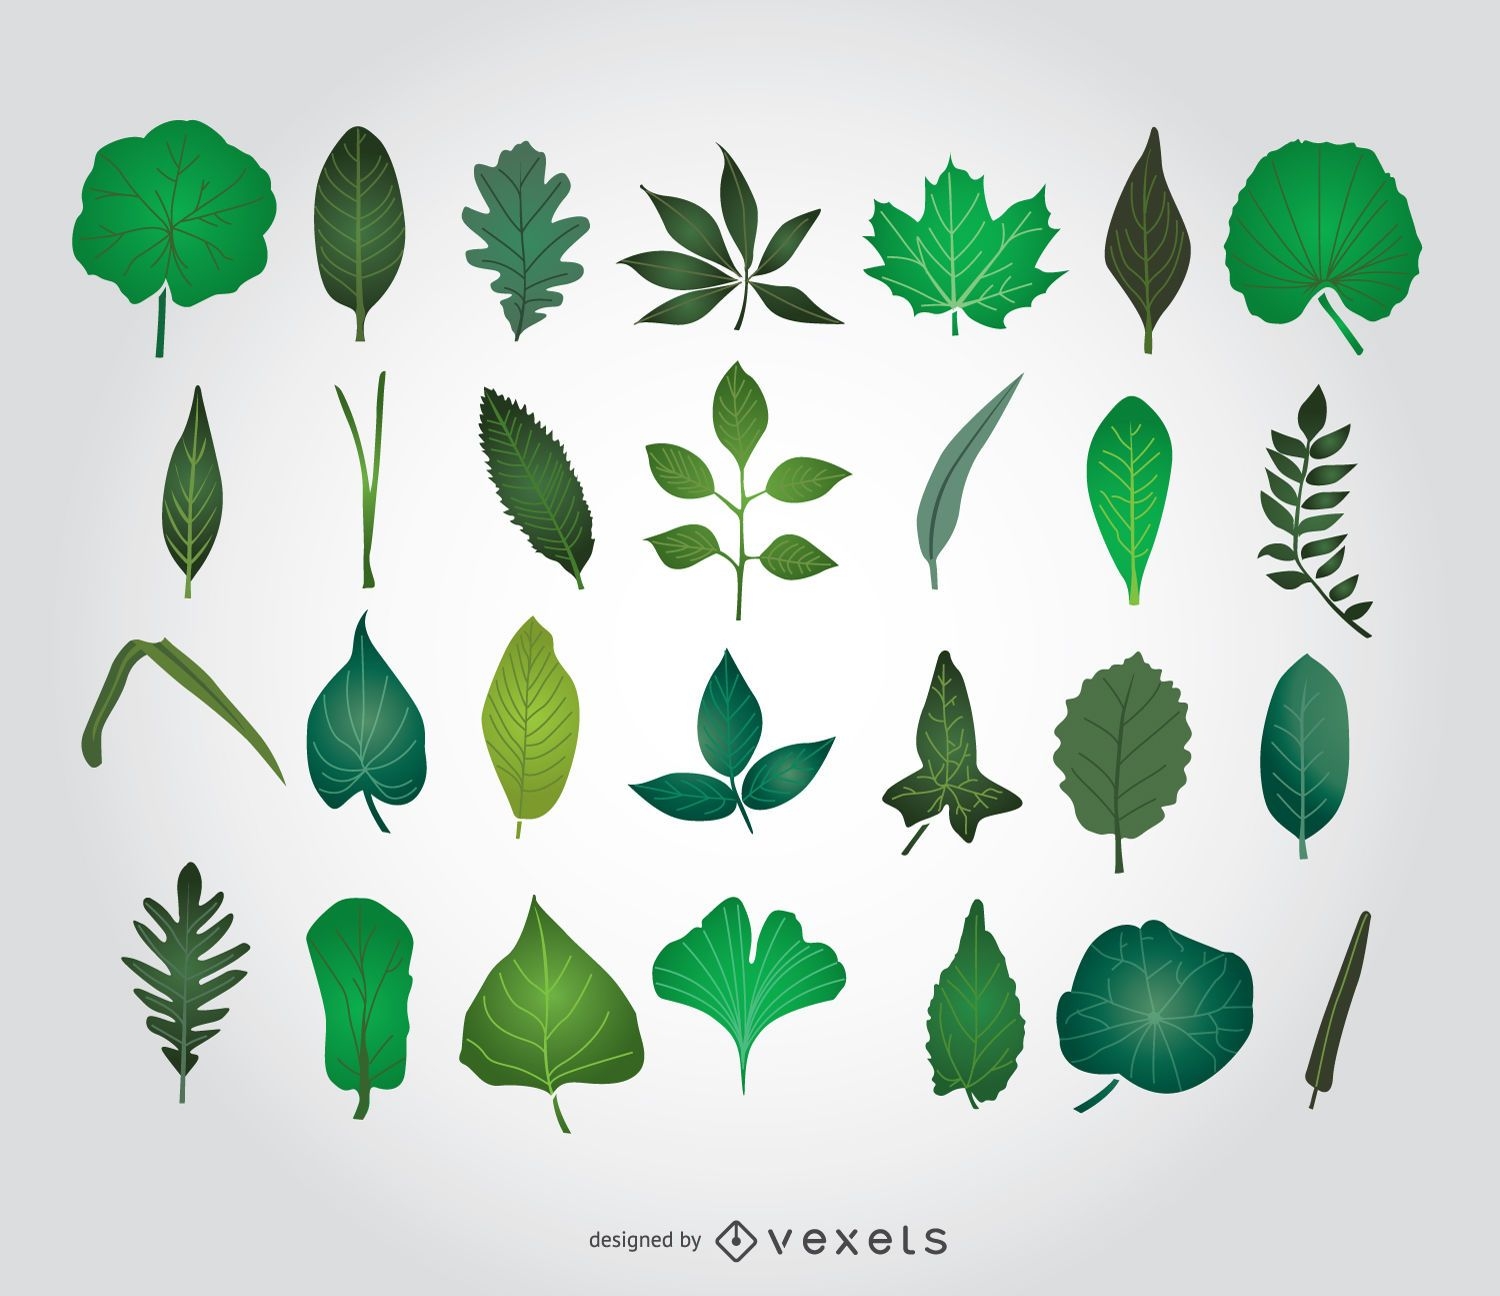 Ilustrações de folhas verdes